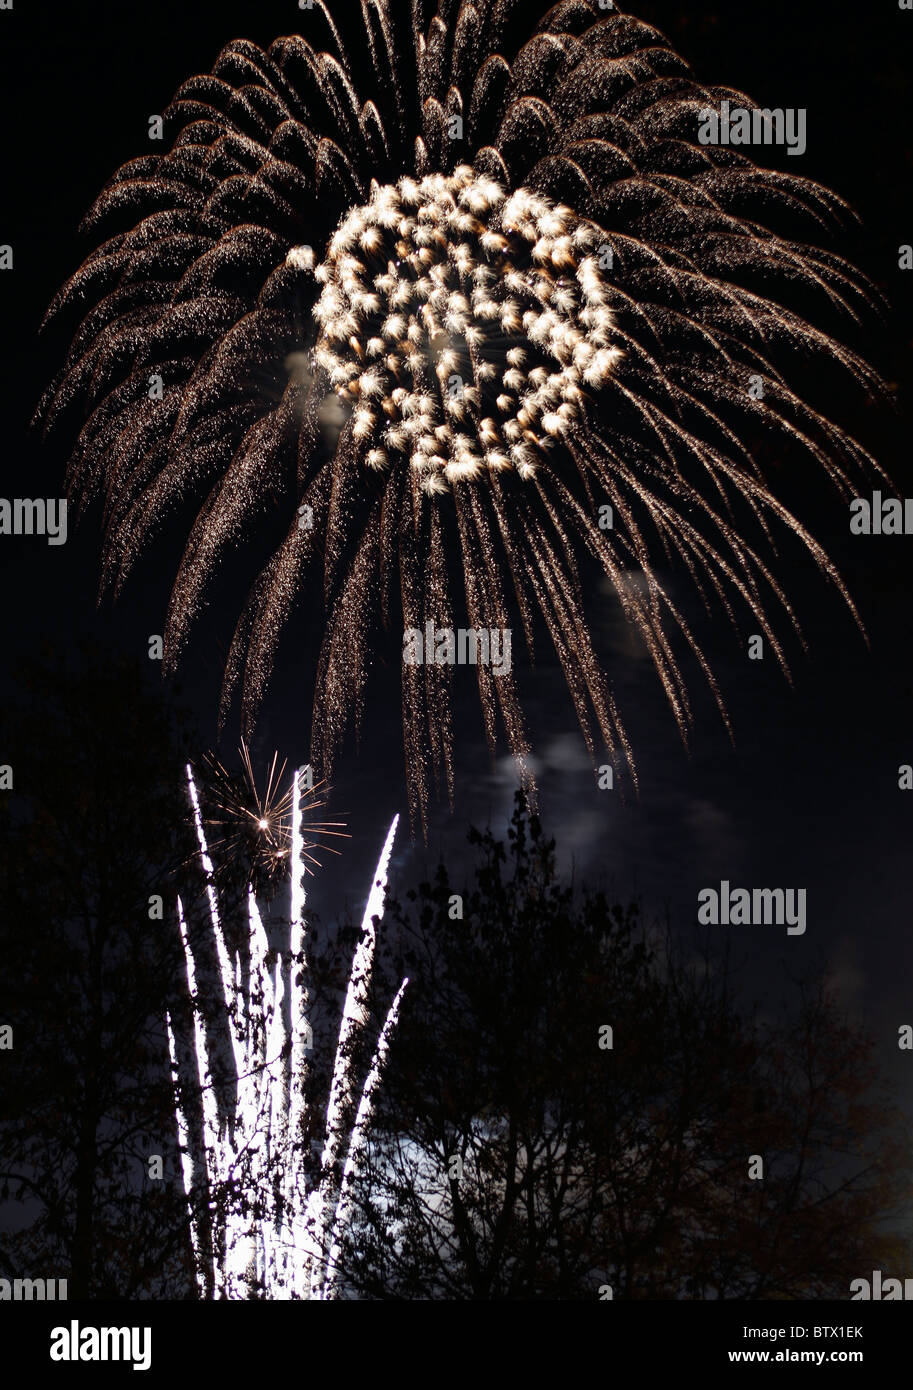 Fireworks display exploding against black sky at night, November 5th, UK Stock Photo